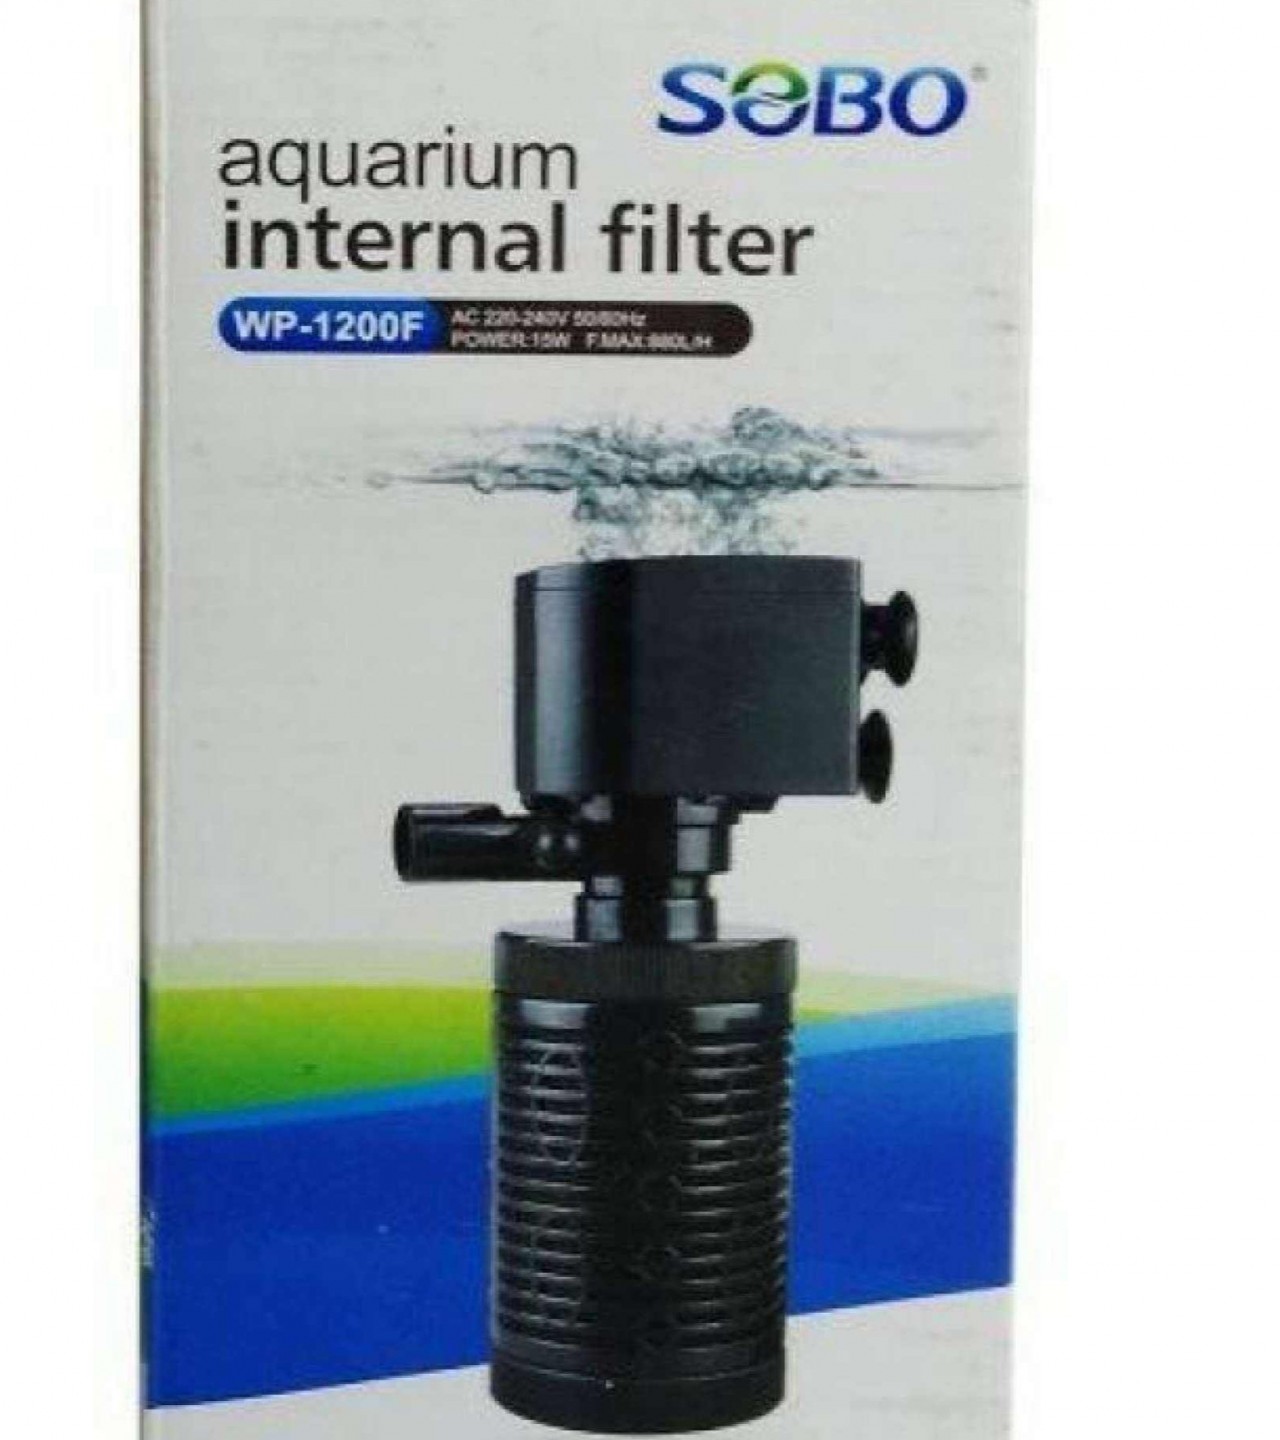 Sobo Corner Aquarium Internal Power Filter WP-1200F (Mechanical Filtration Salt Water Fresh Water)